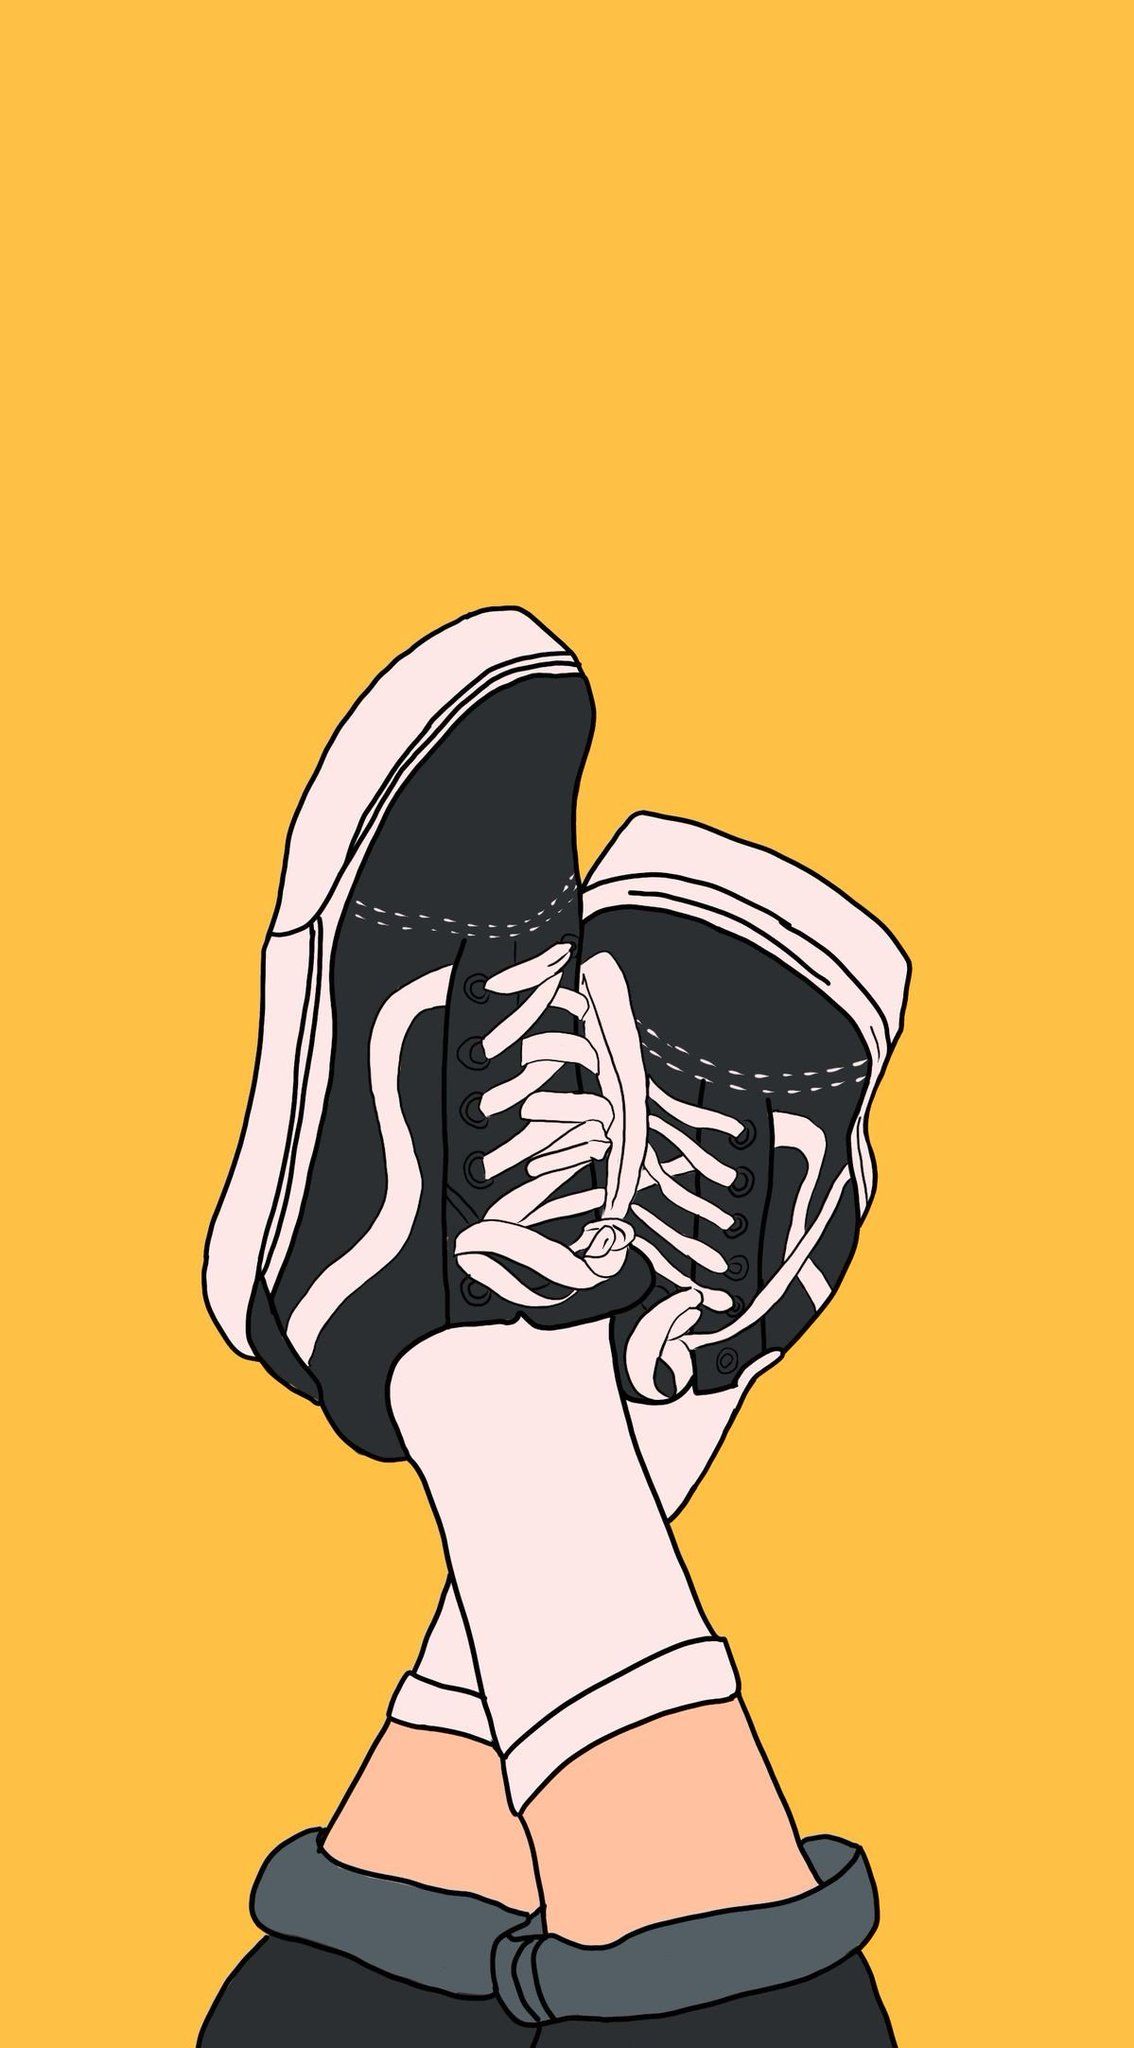 vans shoes tumblr themes